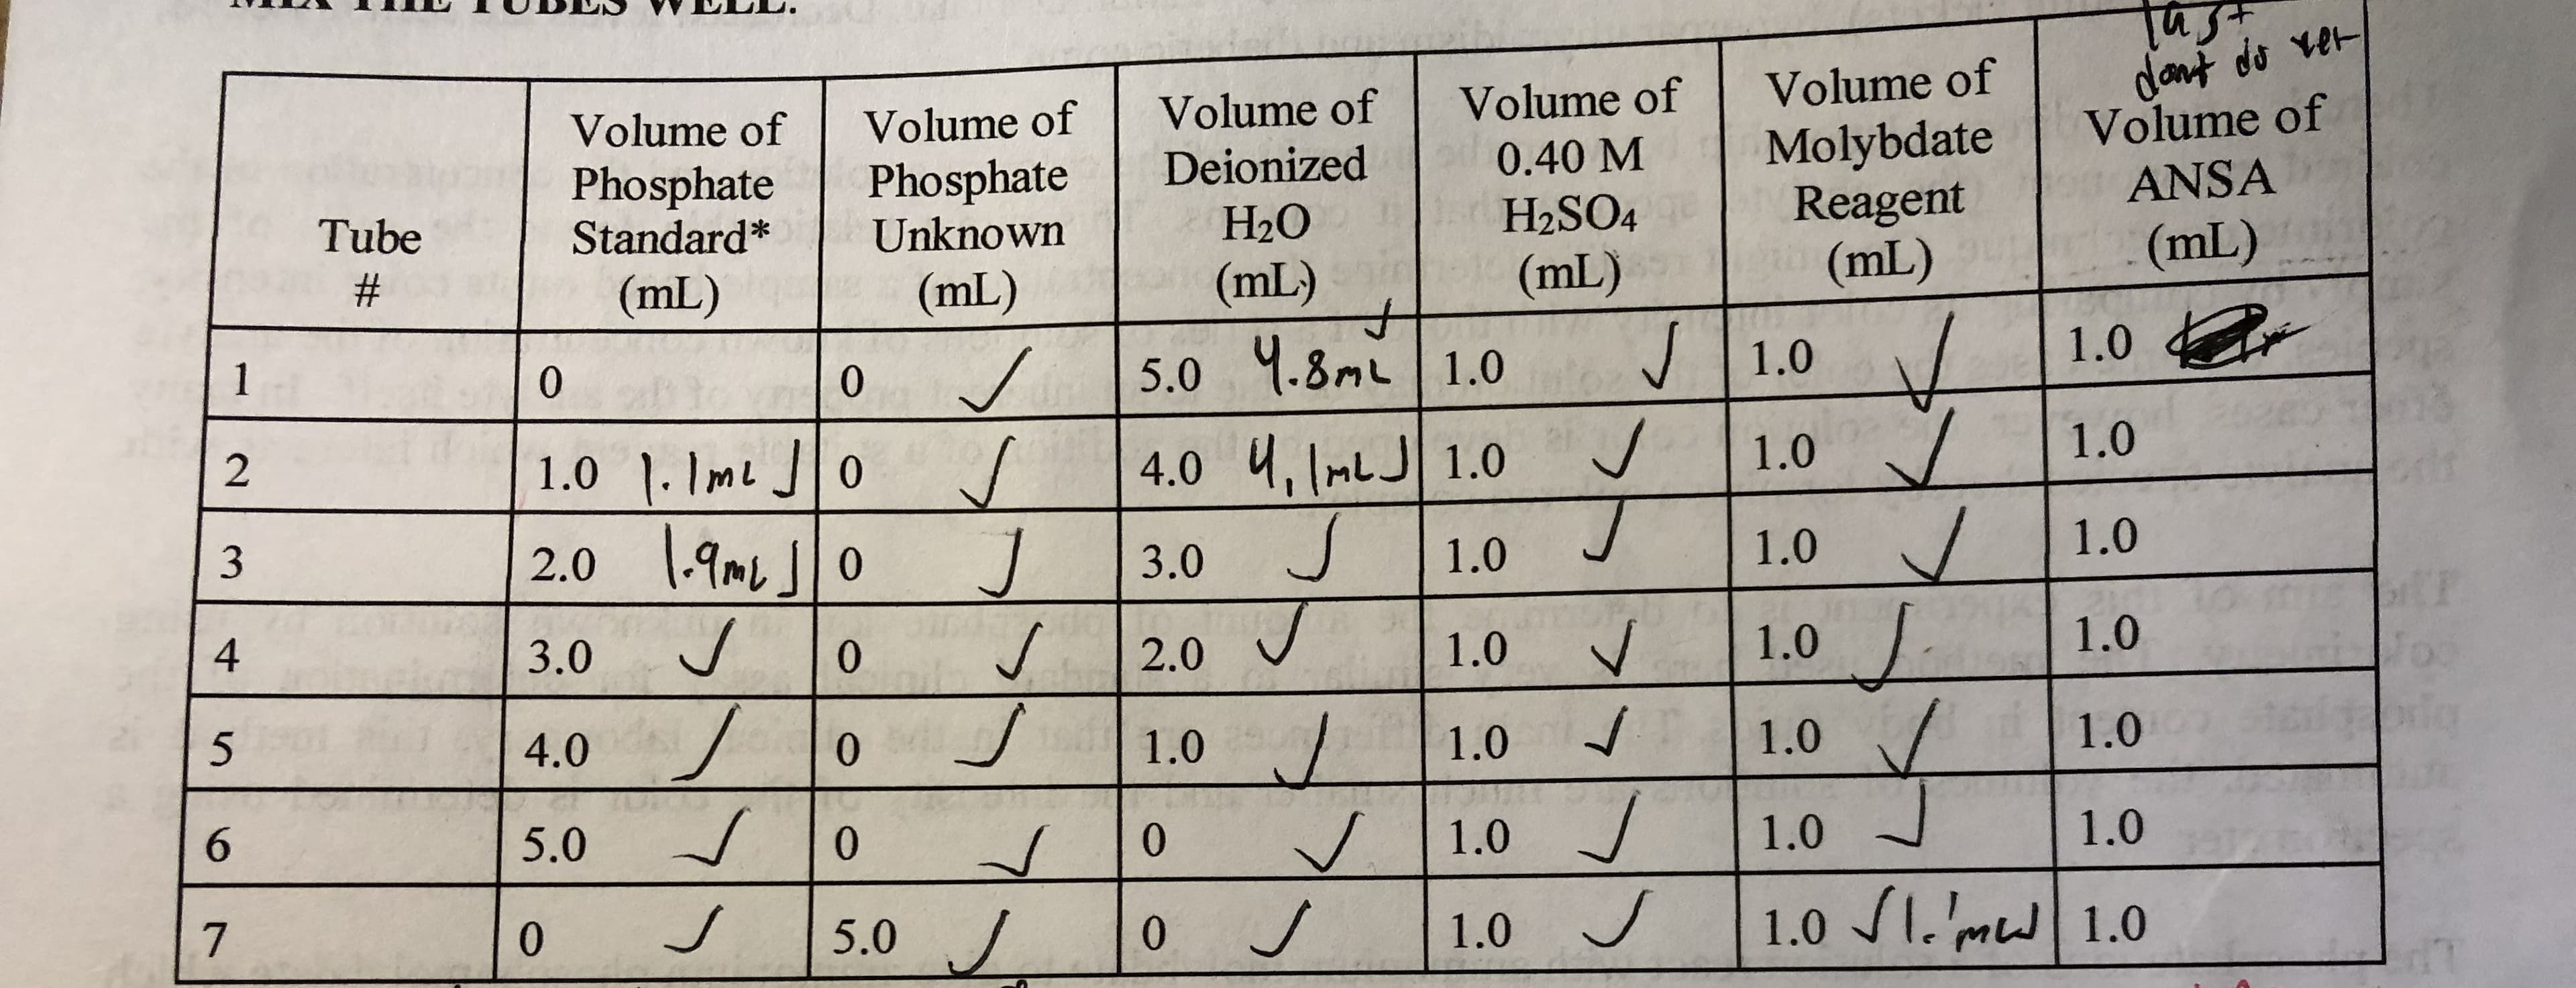 Volume of Volume of Volume of Volume of Volume of
Phosphate | Phosphate | Deionized | 0.40M | Molybdate | Volume of
H2SO4Reagent ANSA
TubeStandardUnknown
(mL)
H2O
(mL)
(mL)
1.0
1.0
1.0
(mL)
(mL)
1.0
5.0 Ч.3mLI 1.0
4.0 1.0 1.0
0
1.0 .Jo
1.0
4
3.0
4.0
5.0
0
2.0
1.0
1.0
1.0
0
1.0
1.0
1.0
o 5.0/
